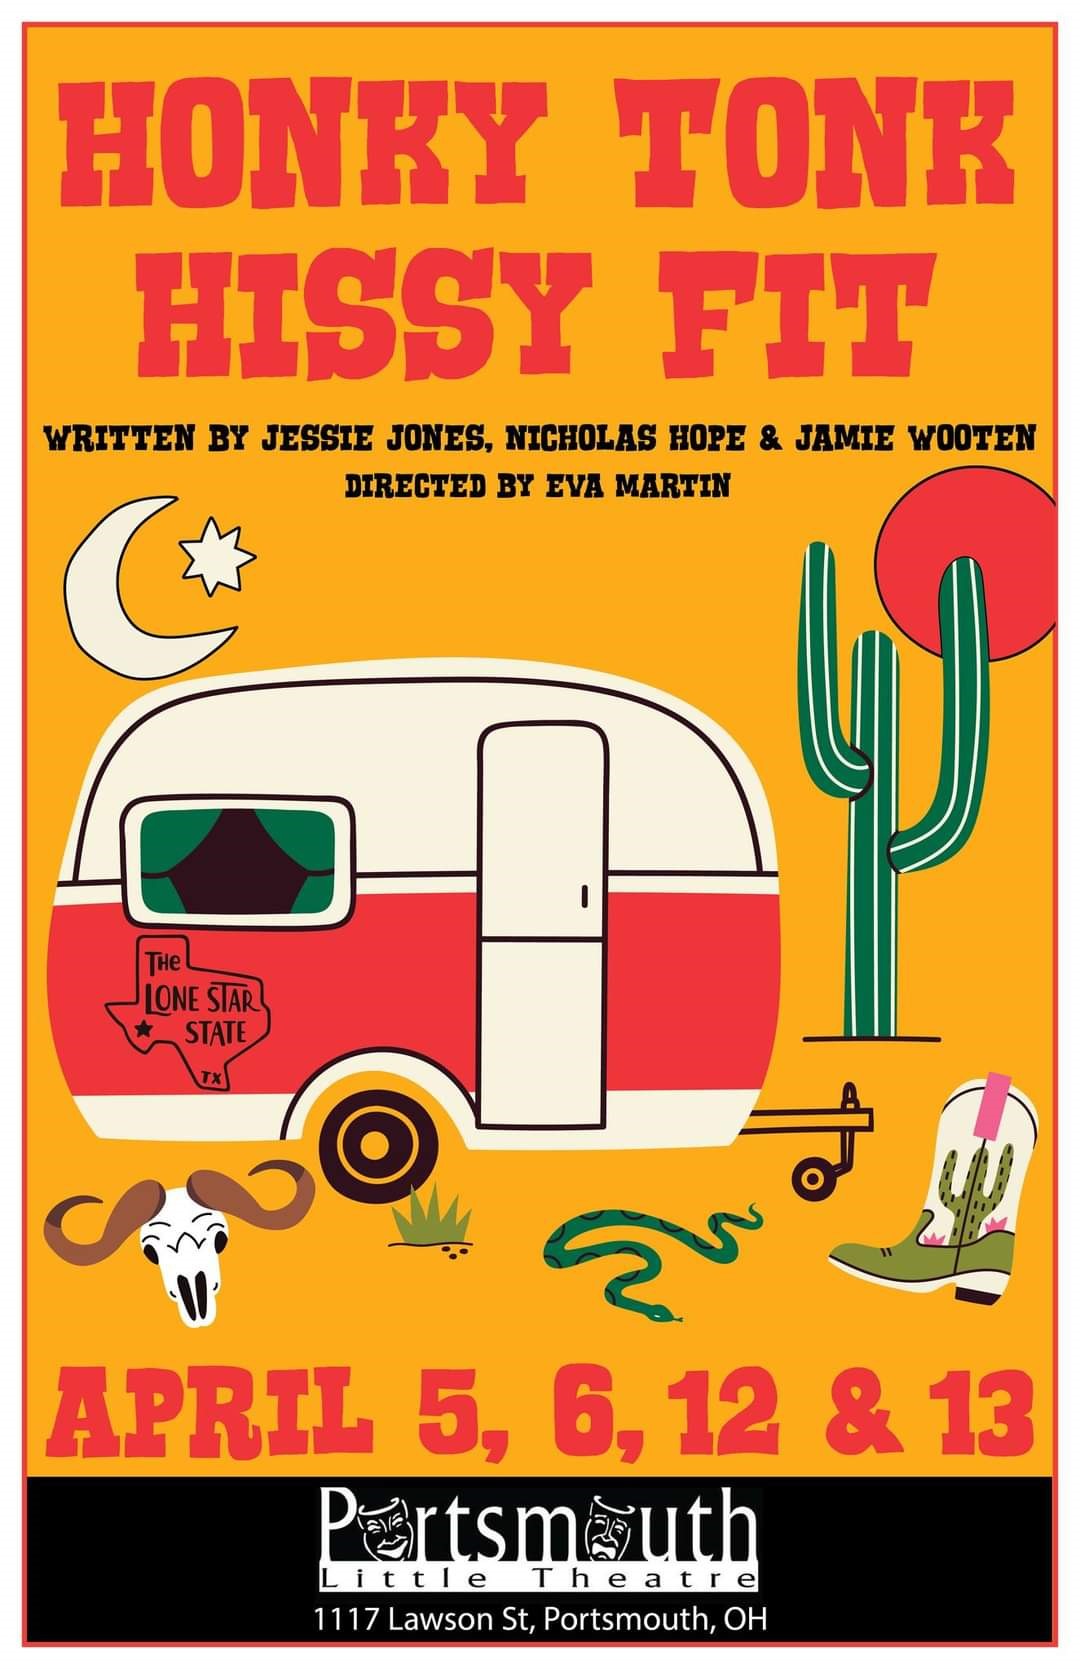 Honky Tonk Hissy Fit  on abr. 05, 19:30@Portsmouth Little Theatre - Elegir asientoCompra entradas y obtén información enPortsmouth Little Theatre 